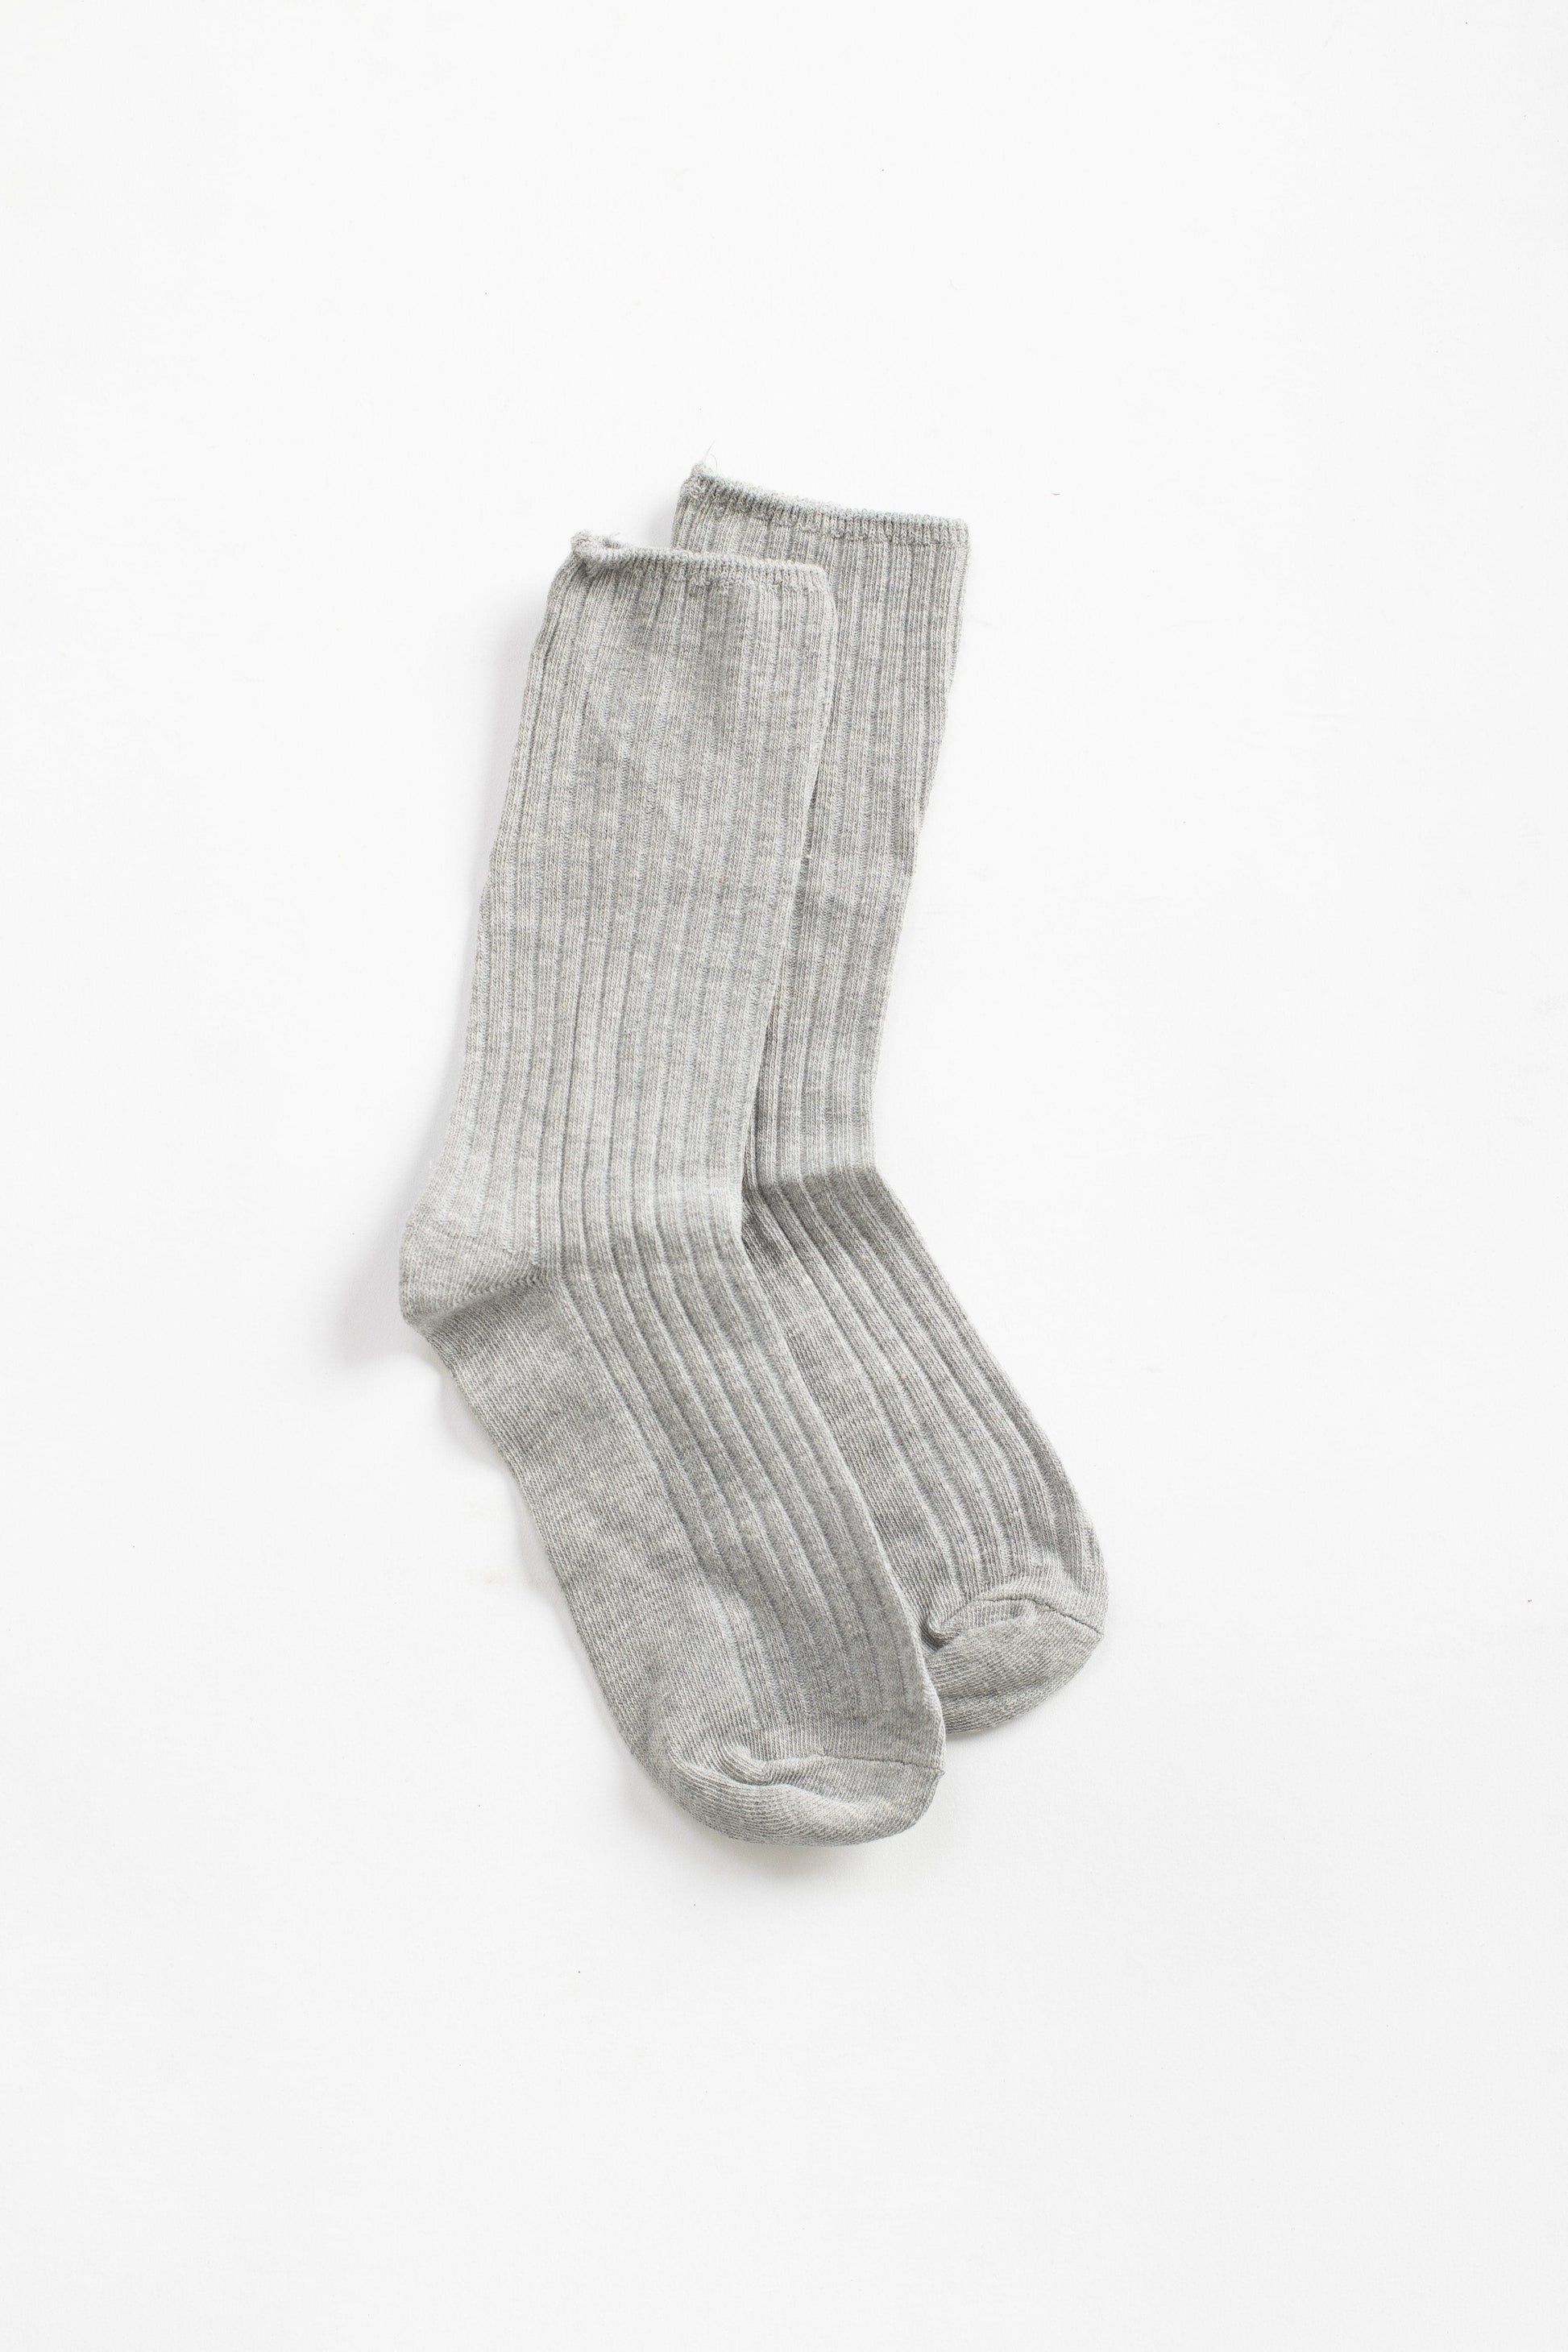 Sandhill Ribbed Socks WOMEN'S SOCKS Ali Express H. Grey OS 